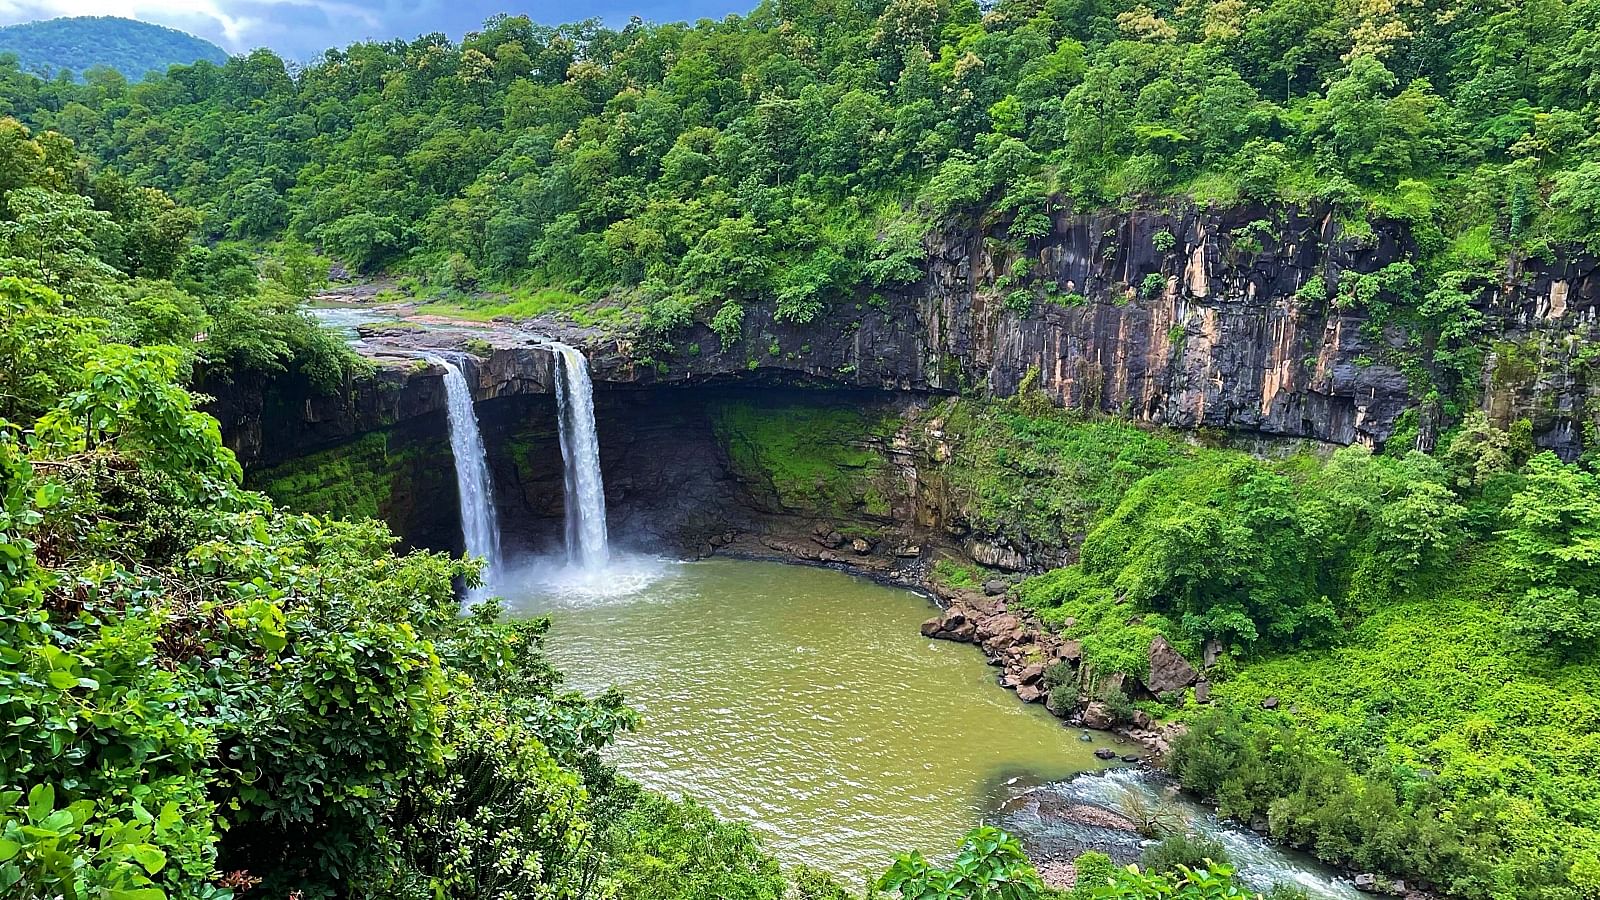 The 100-ft tall Girmal waterfall, a notable landmark in Saputara, is Gujarat's highest waterfall. Credit: Veidehi Gite